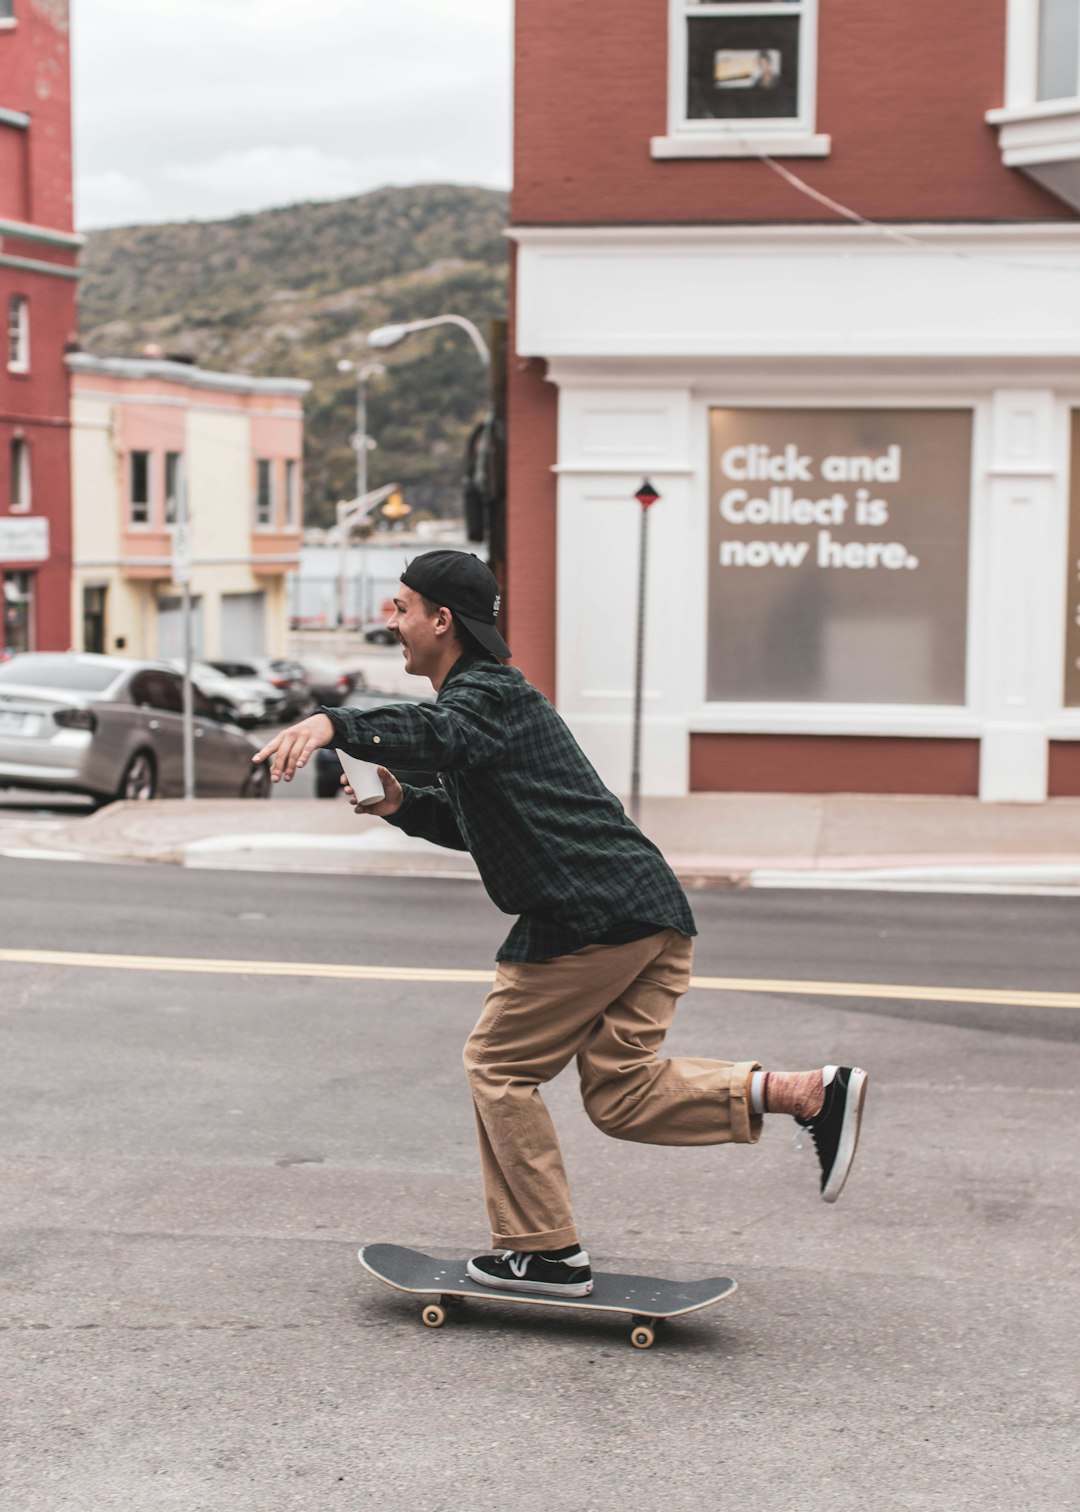 man in black shirt and brown pants riding skateboard during daytime